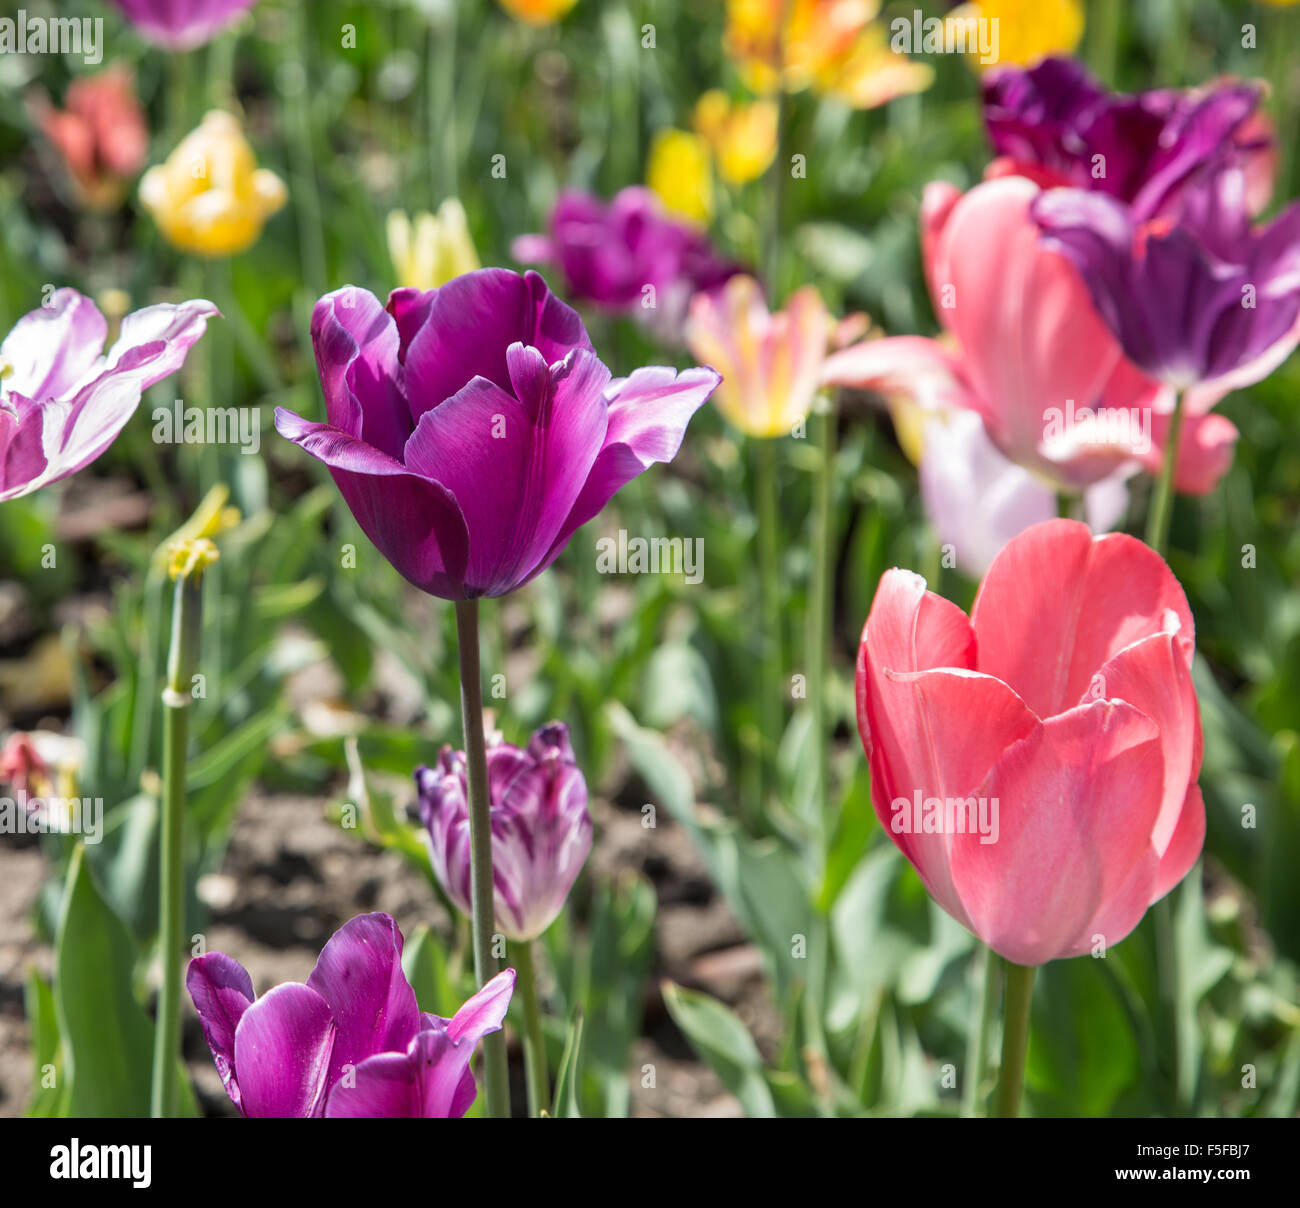 Colorful tulips Close-up shot. Nature background. Stock Photo